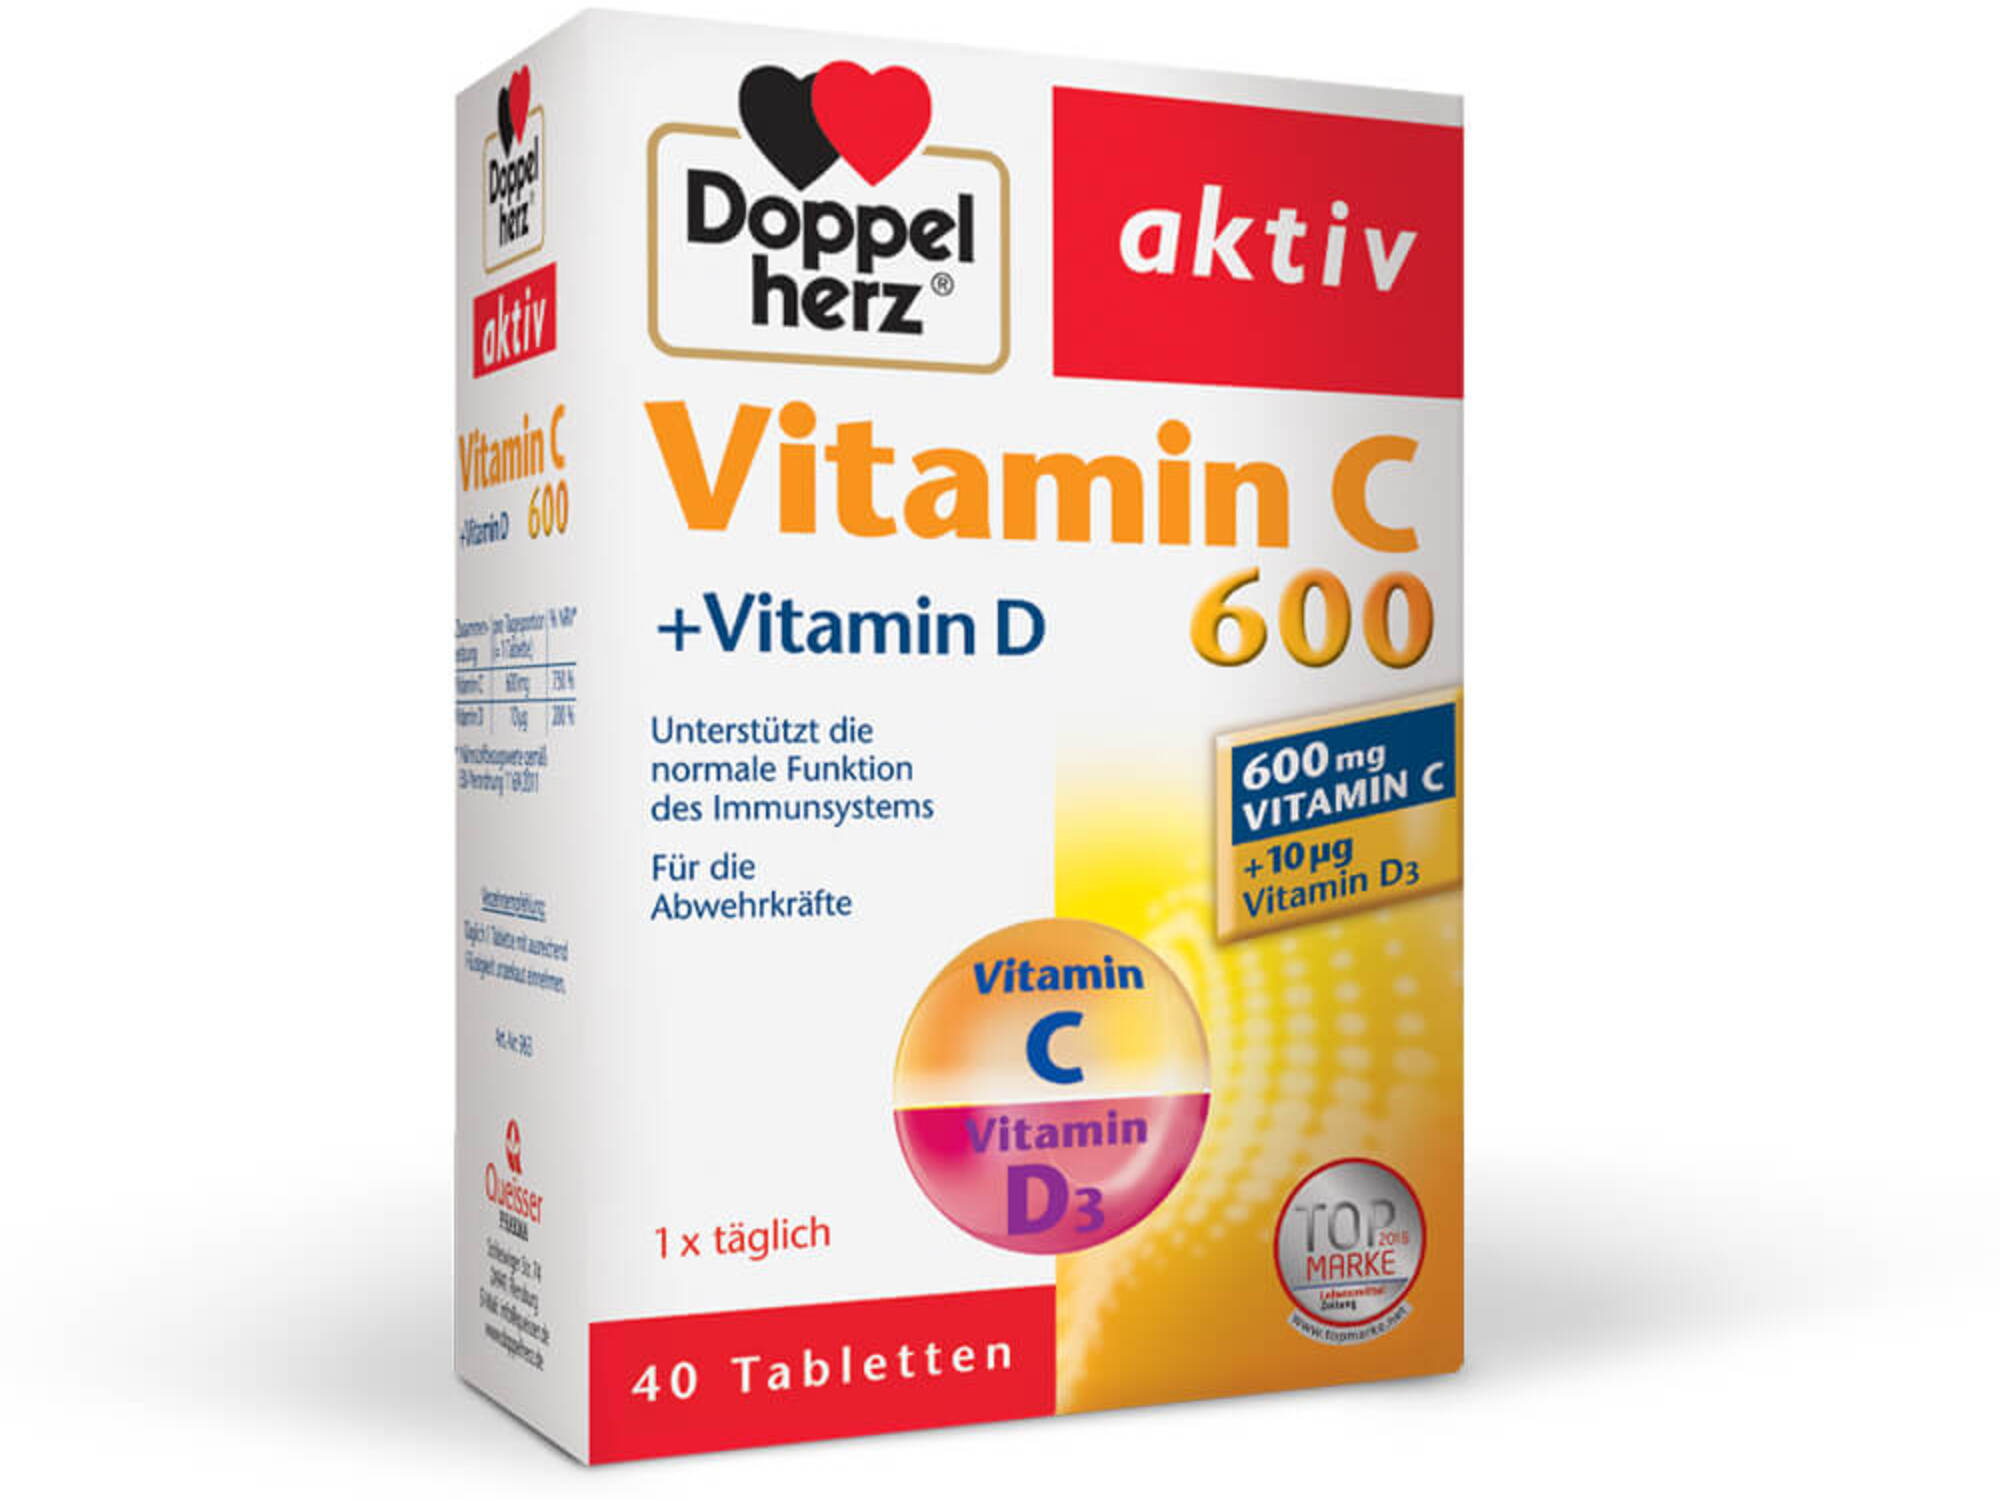 Doppelherz Aktiv Vitamin C 600 + vitamin D3